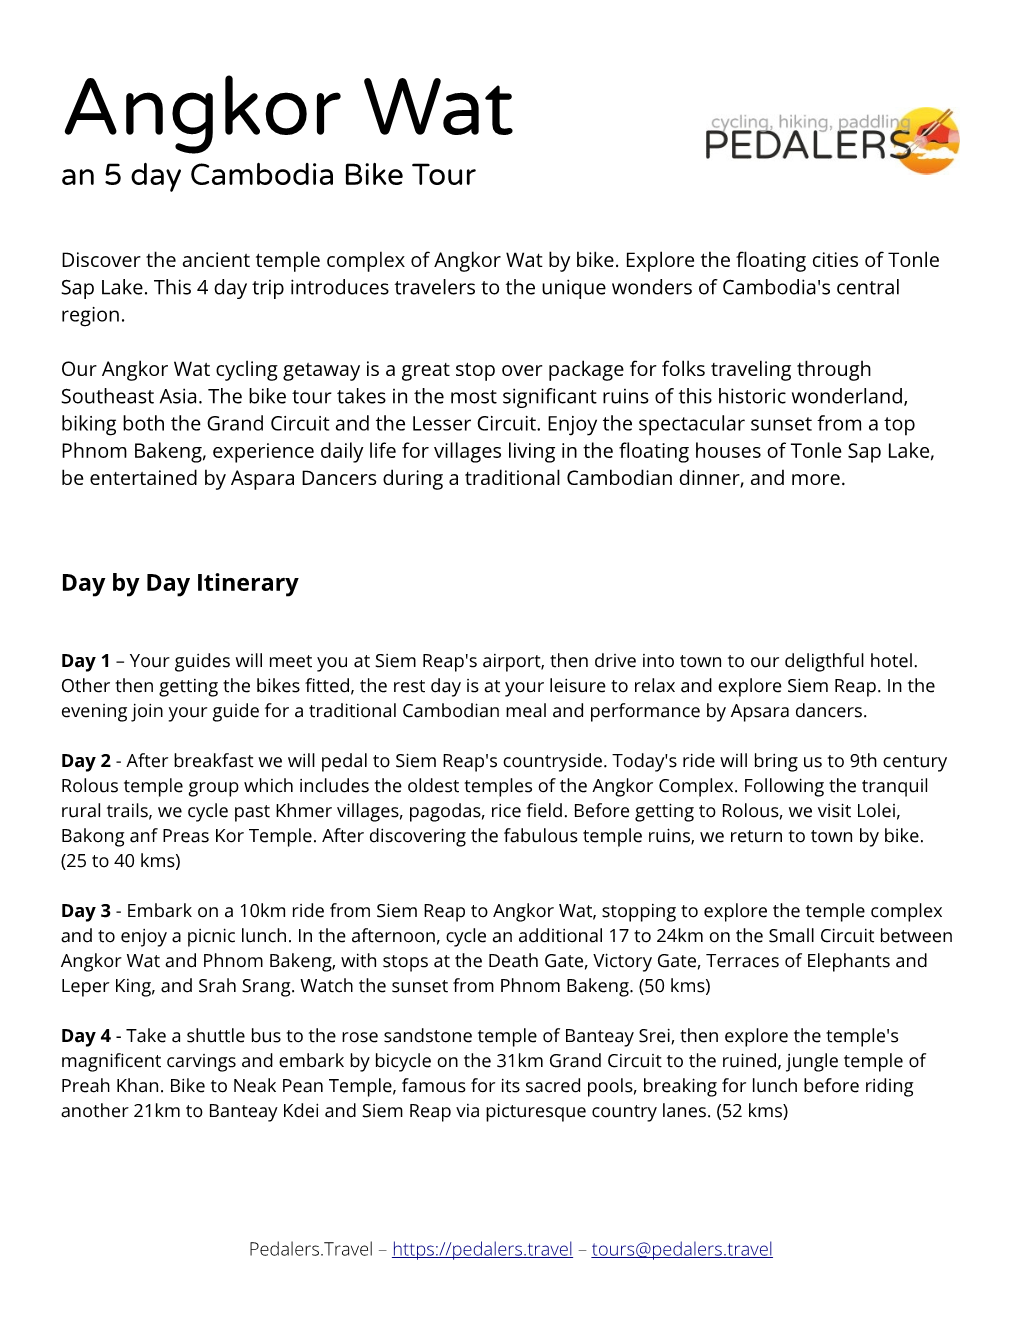 Angkor Wat an 5 Day Cambodia Bike Tour